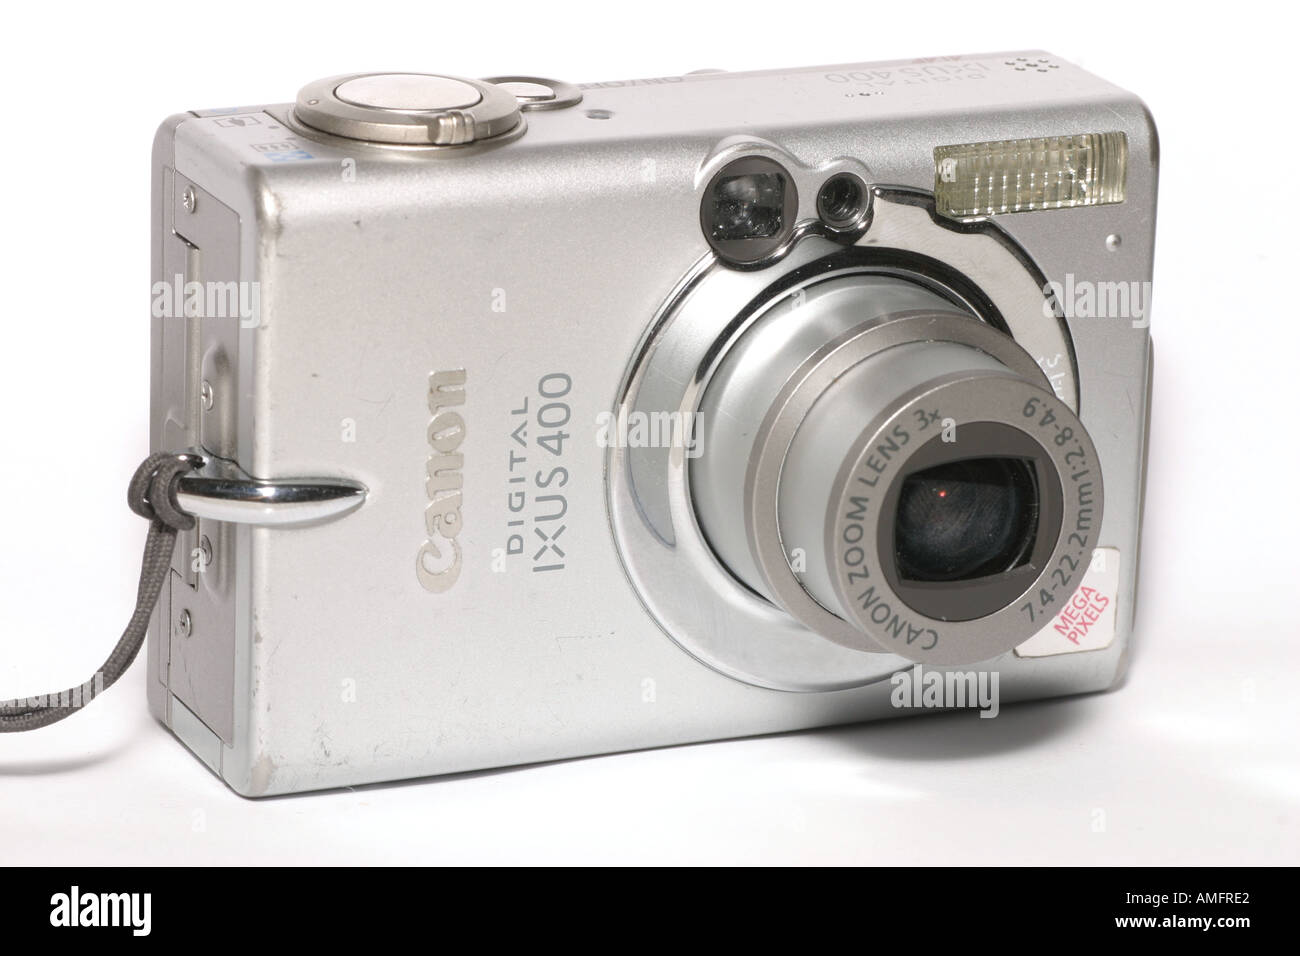 A Canon DIgital Ixus 400 compact digital camera with 4 Megapixels Stock  Photo - Alamy